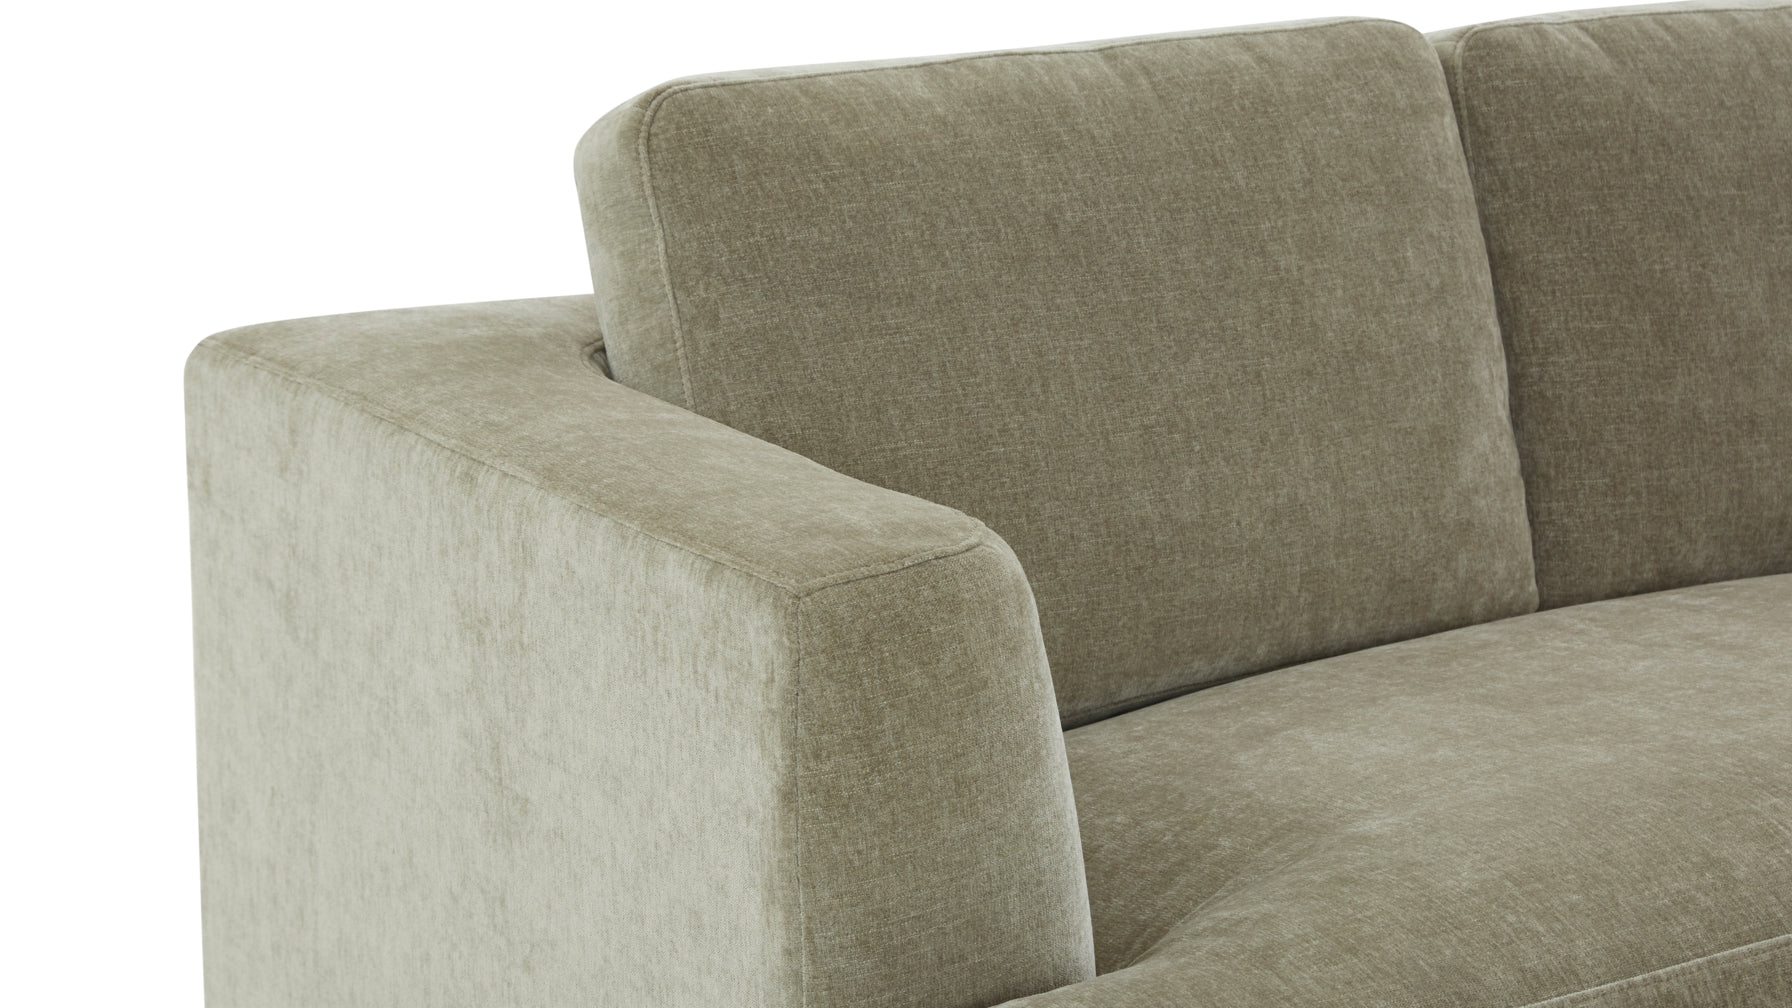 Good Company Sofa, 2 Seater, Artichoke - Image 6